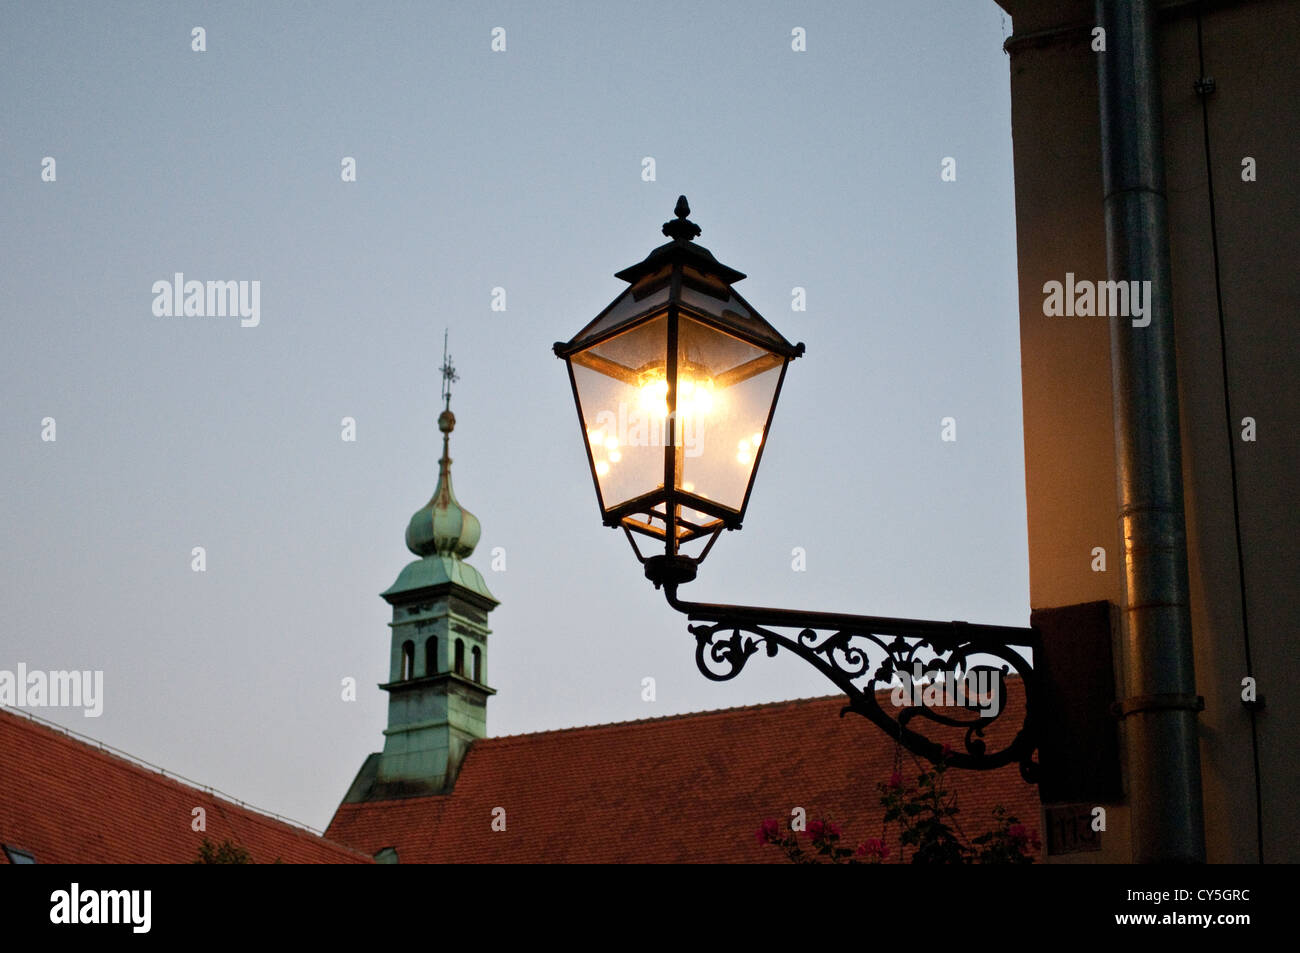 Lit lantern and church spire, Old Town, Zagreb, Croatia Stock Photo